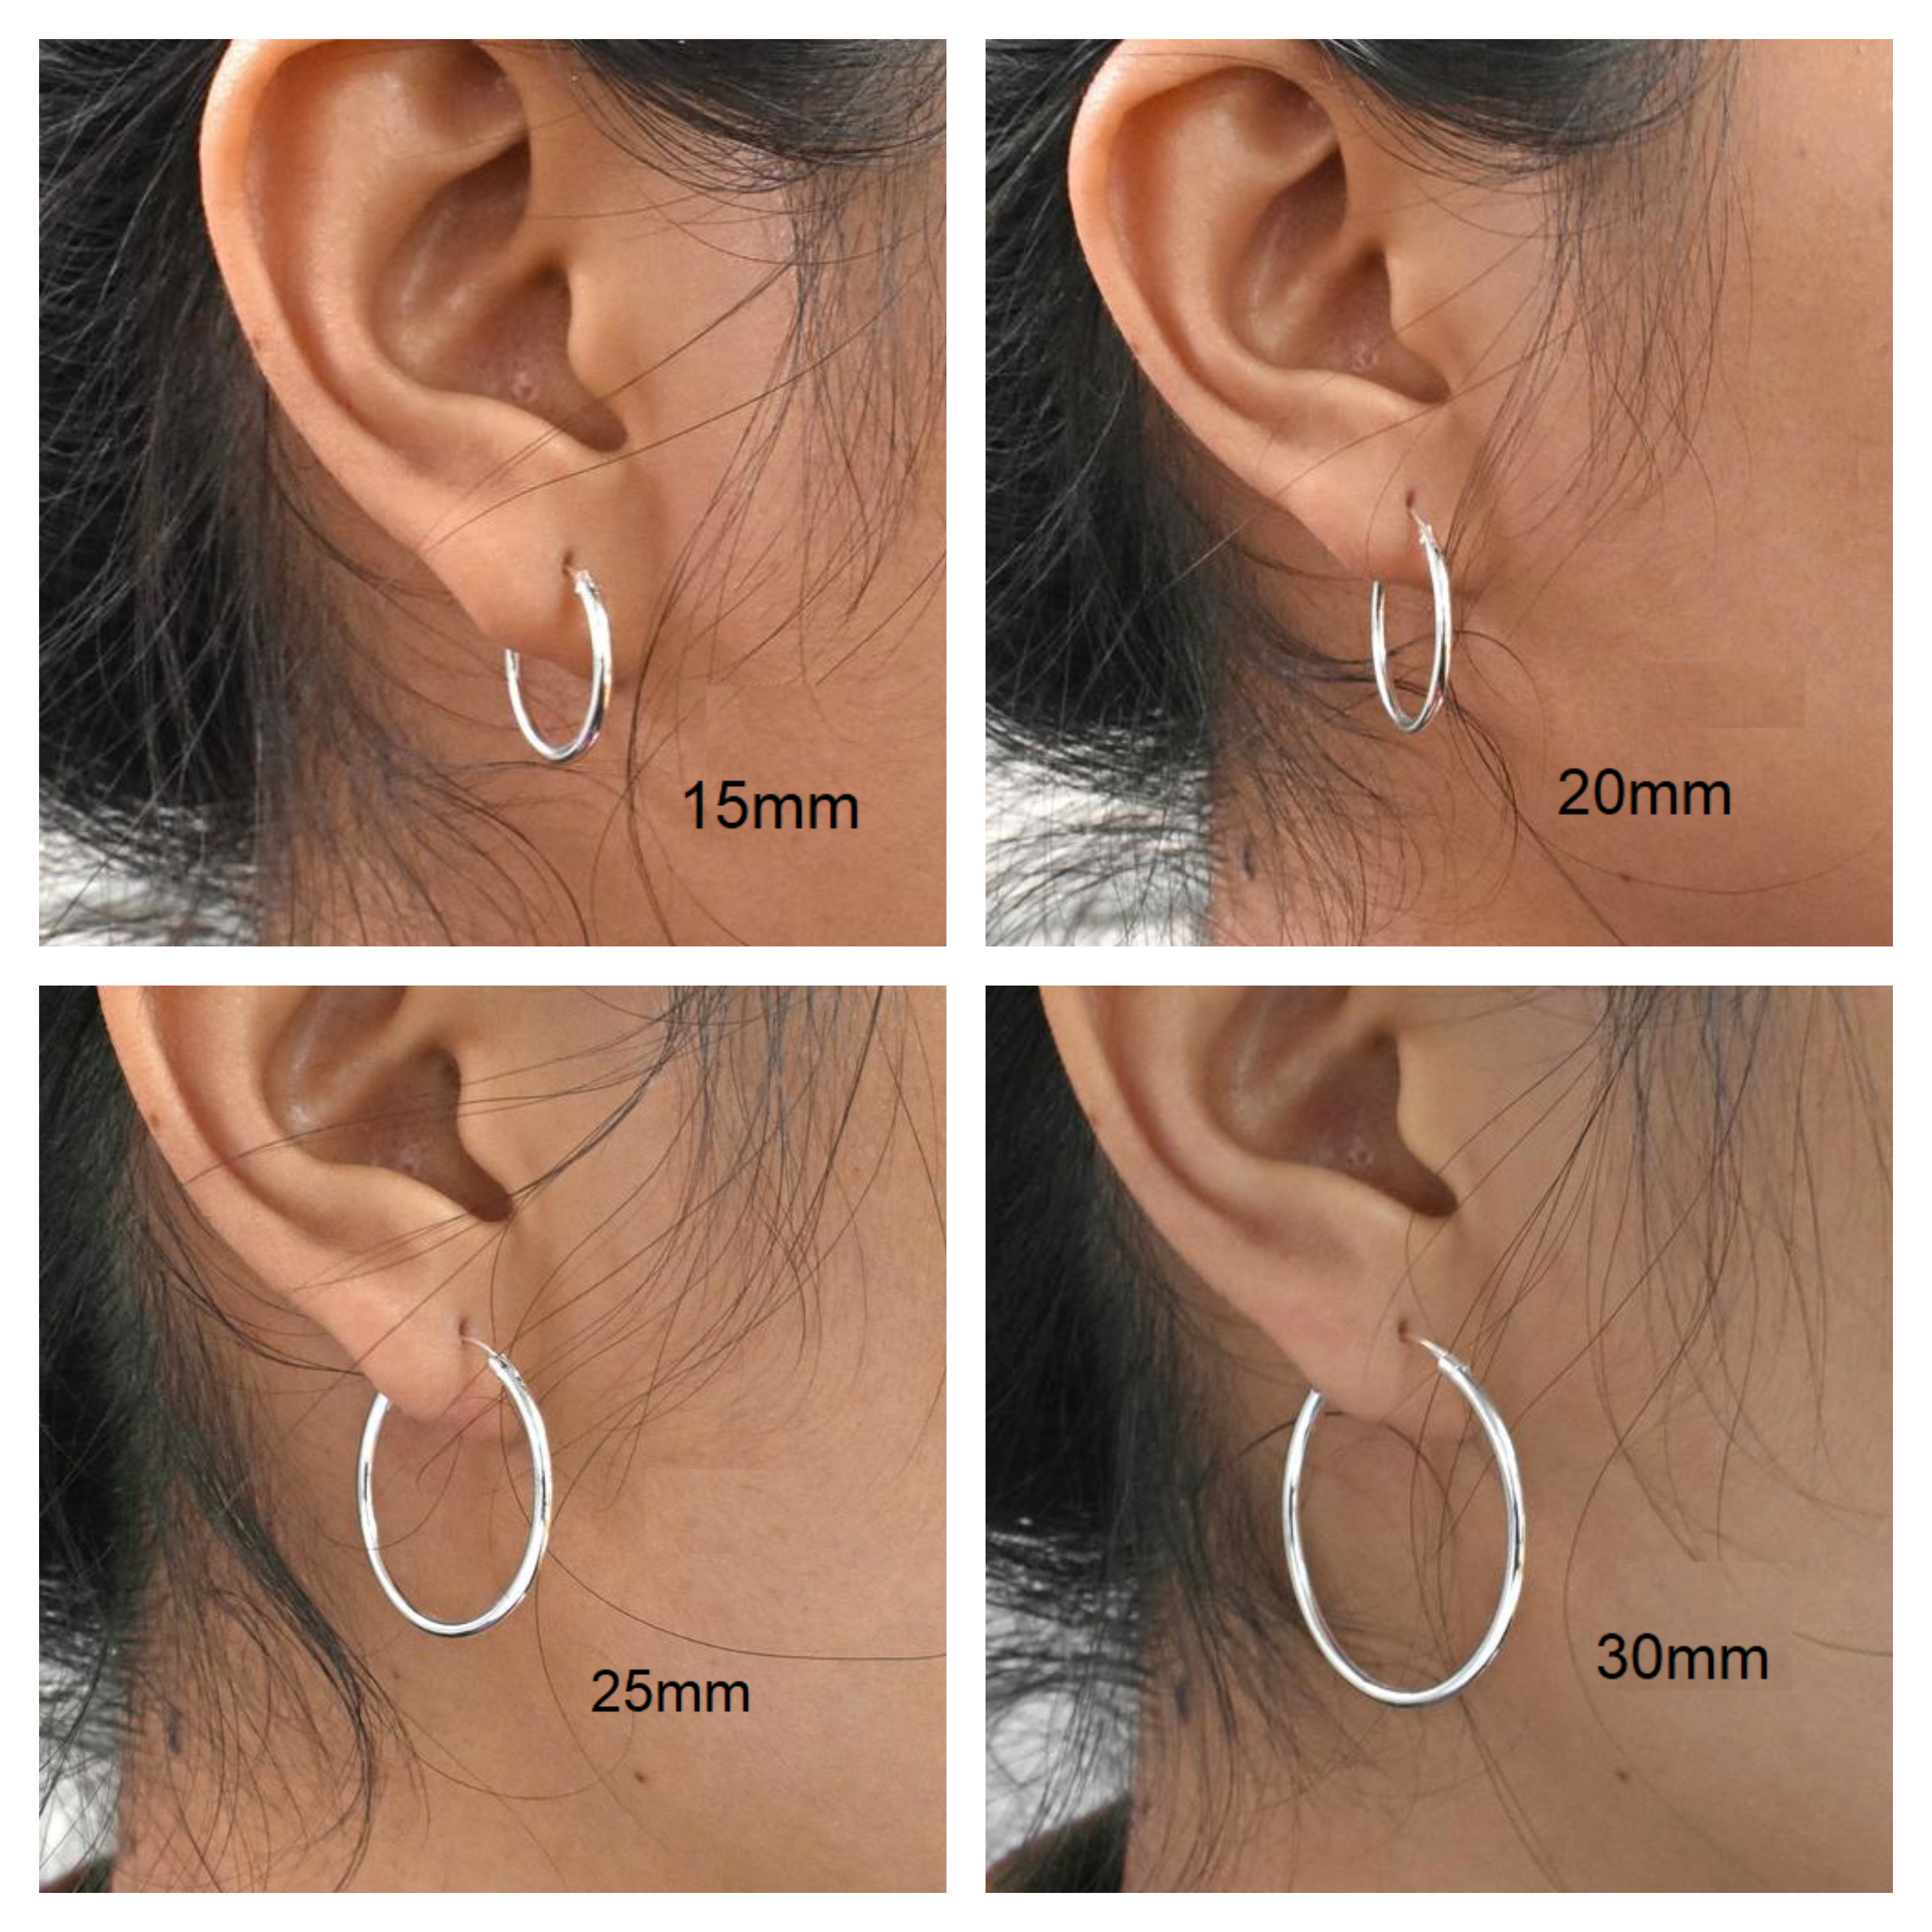 Buy Huggie Earrings For Men Online in India - Inox Jewelry India